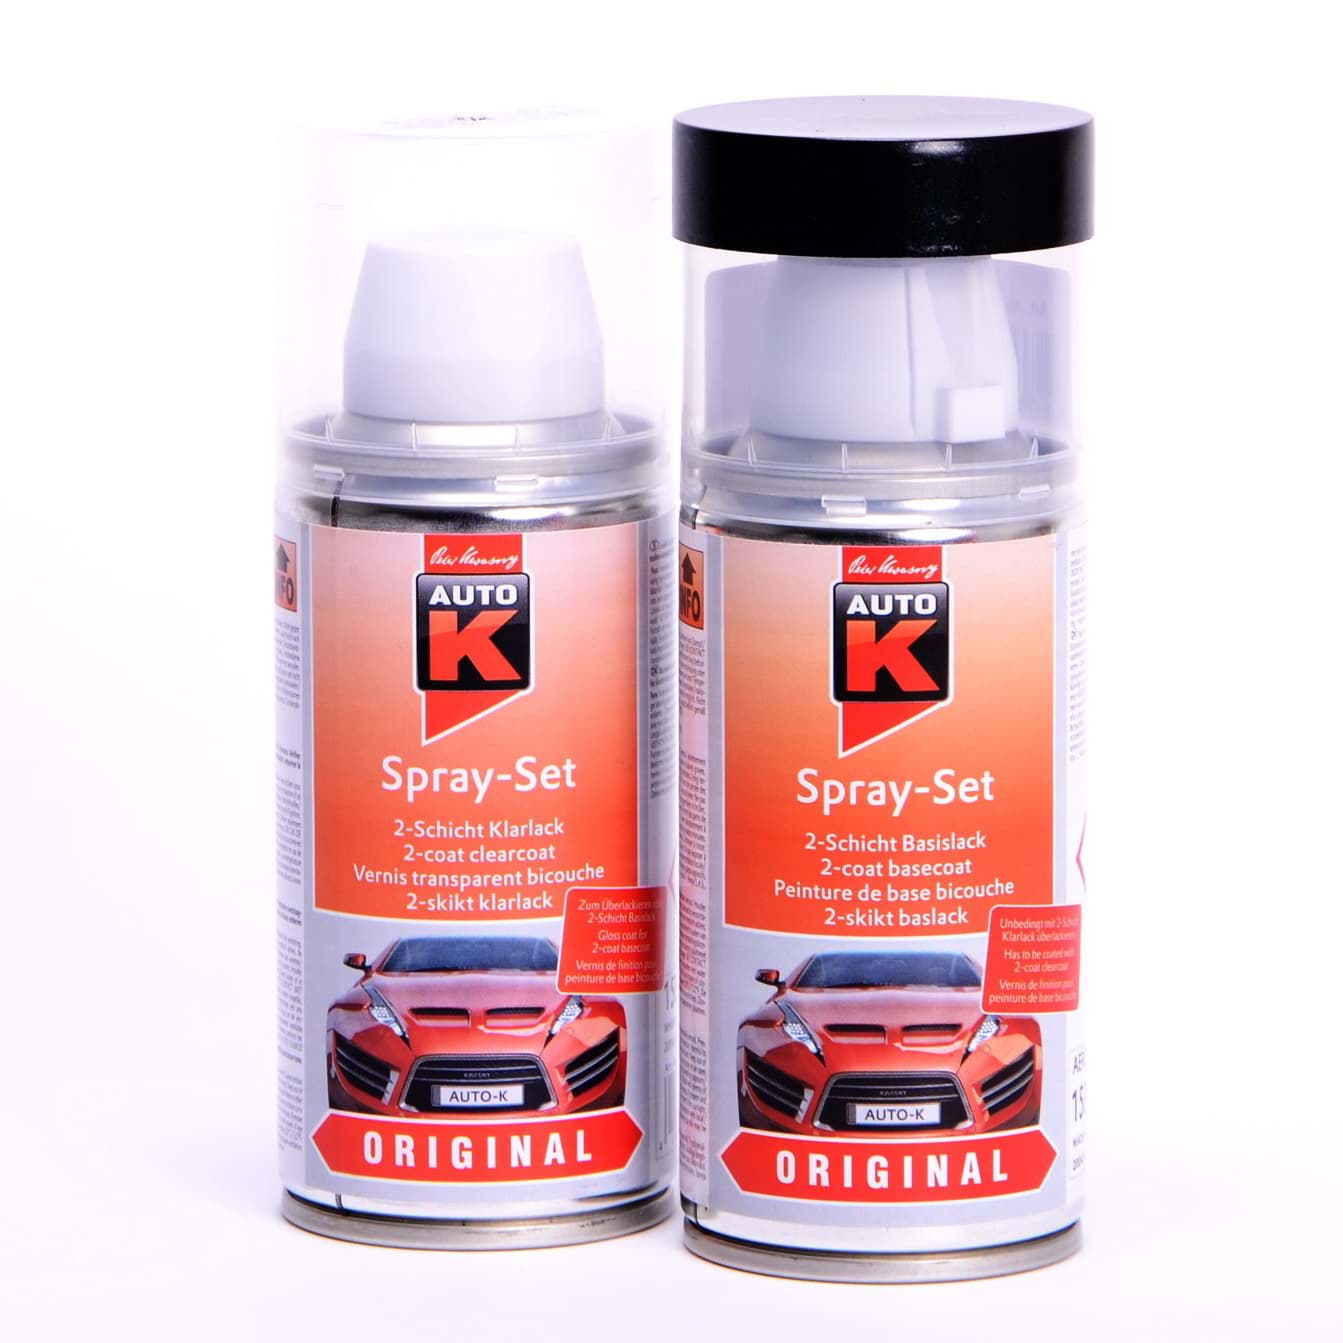 Afbeelding van Auto-K Spray-Set Autolack für Mercedes 723 Cubanitsilber met 23337